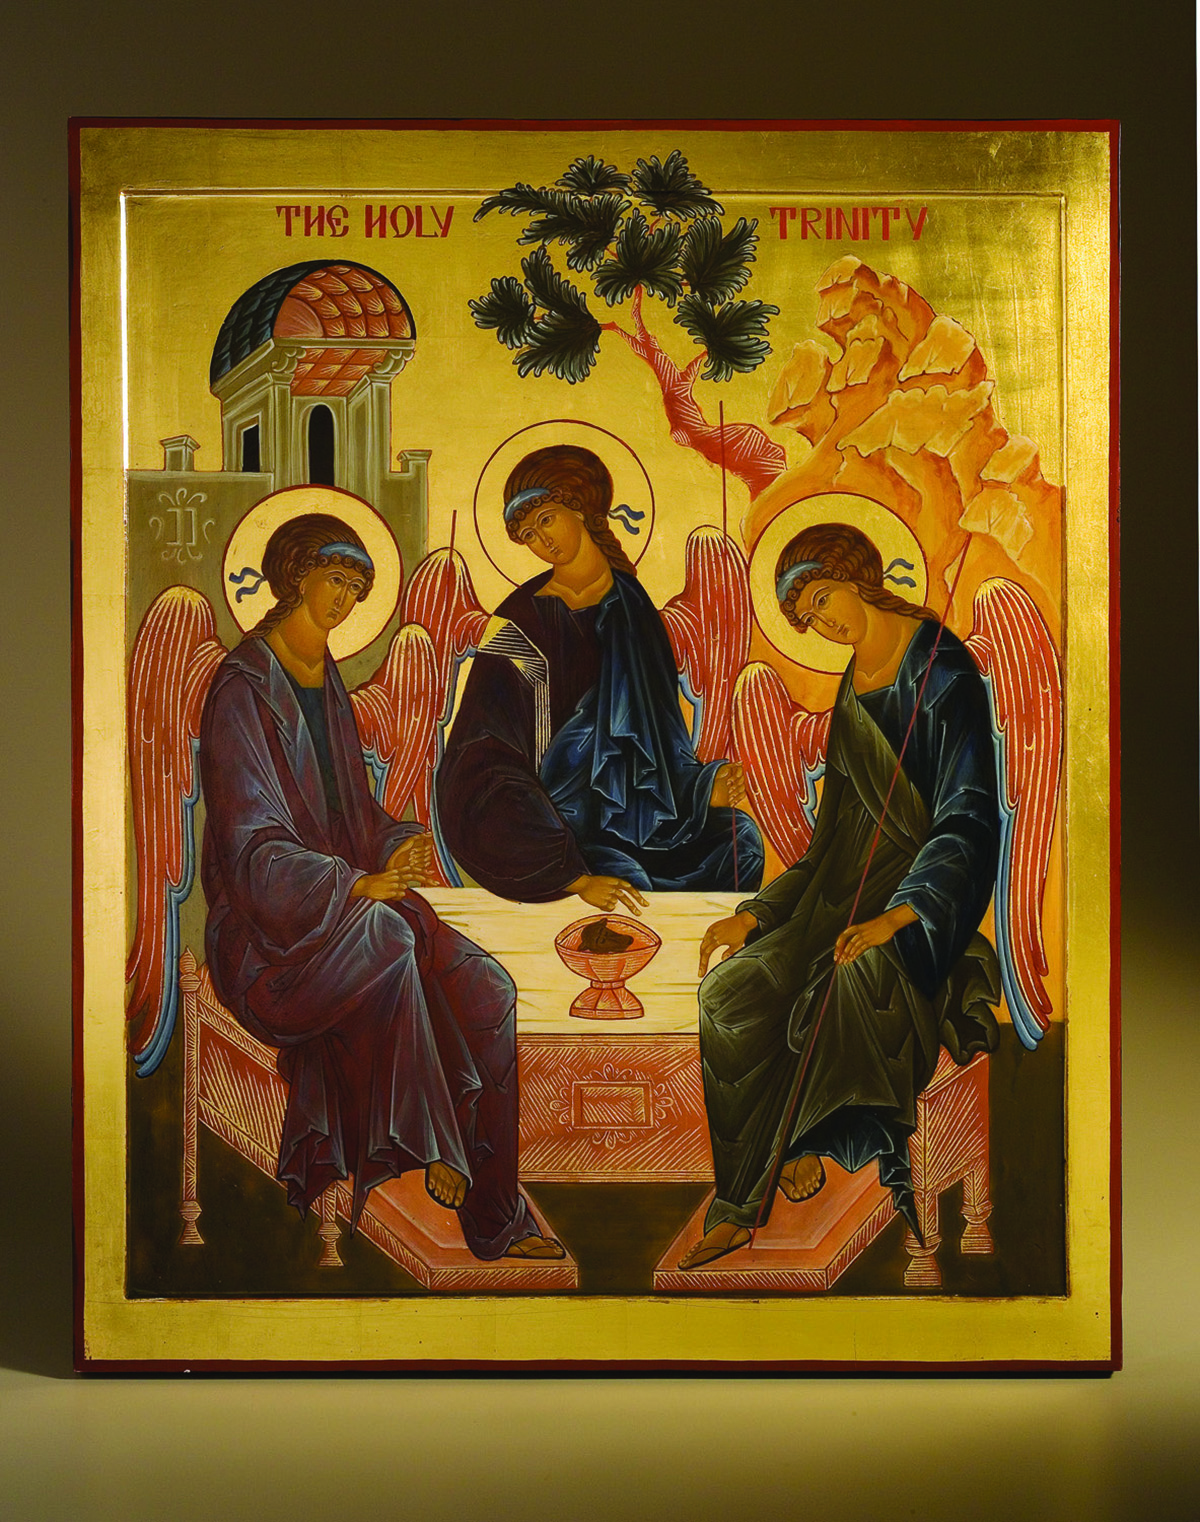 The Holy Trinity, Russian Orthodox icon by Sister Faith Riccio. Photo: Jason Dowdle.